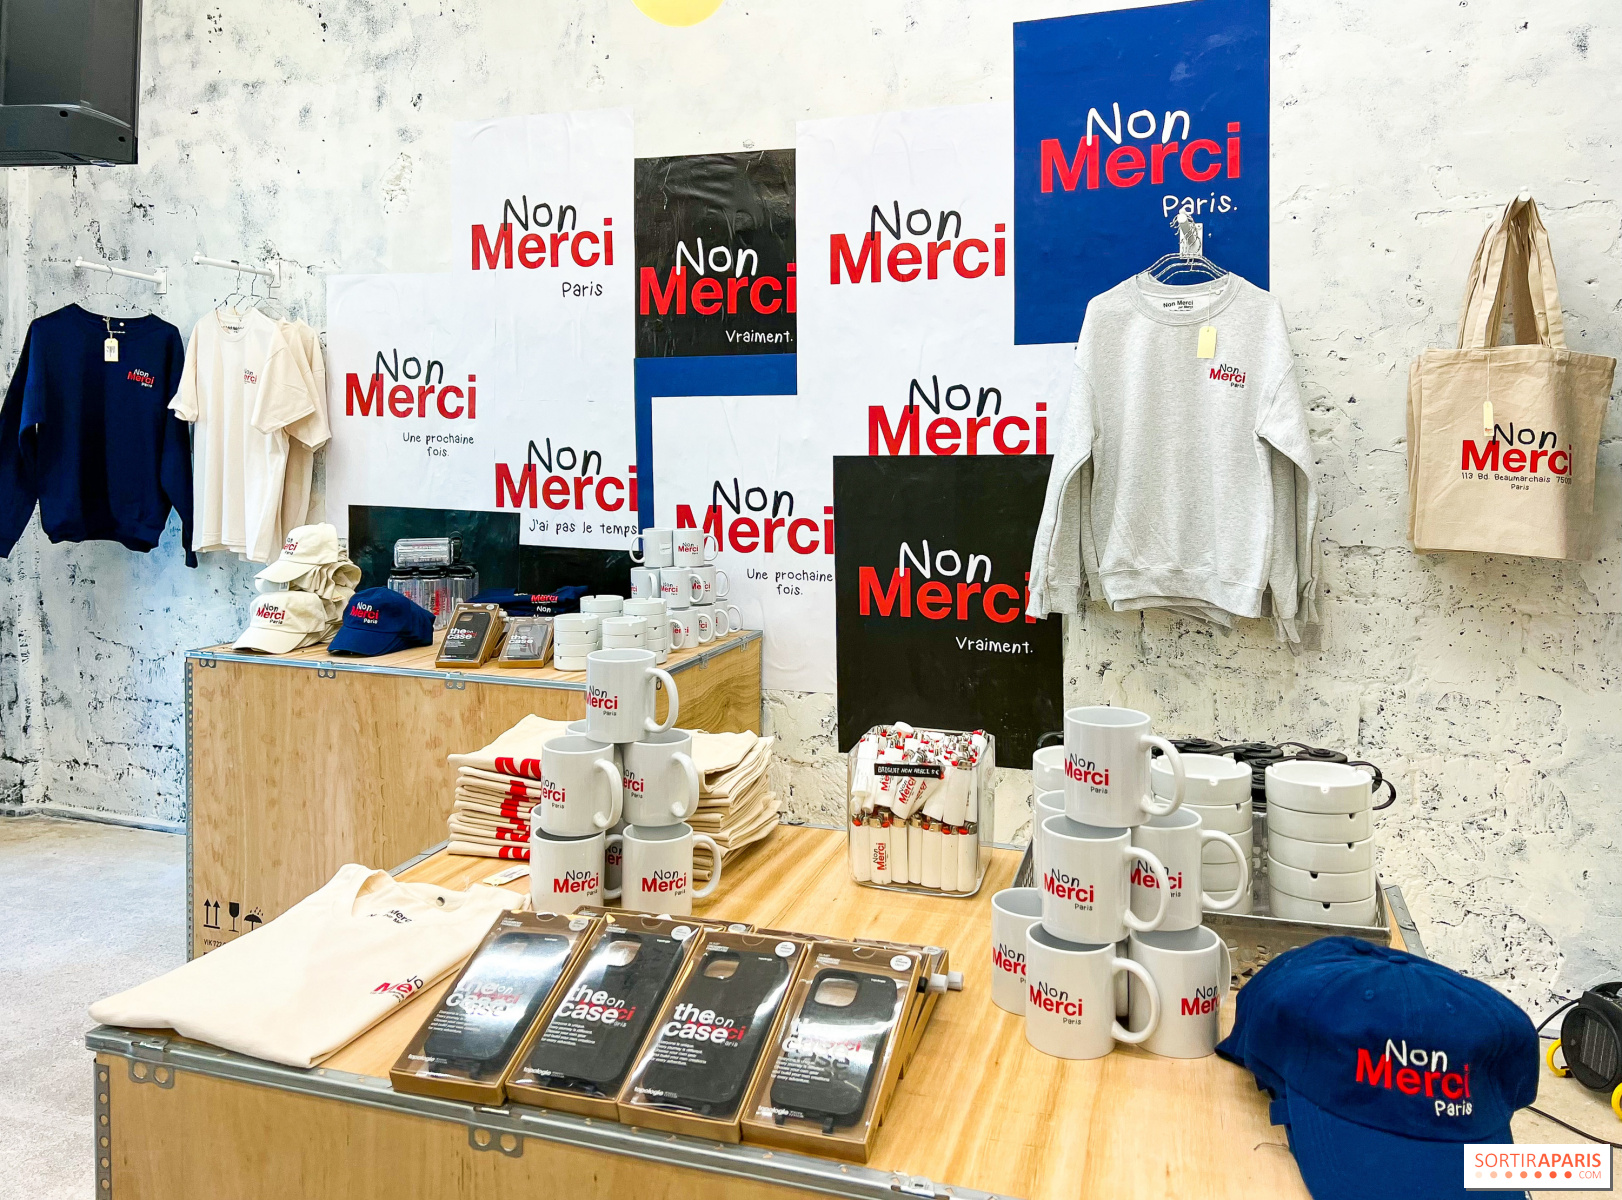 Non Merci, the reprobate pop up store of Merci Paris